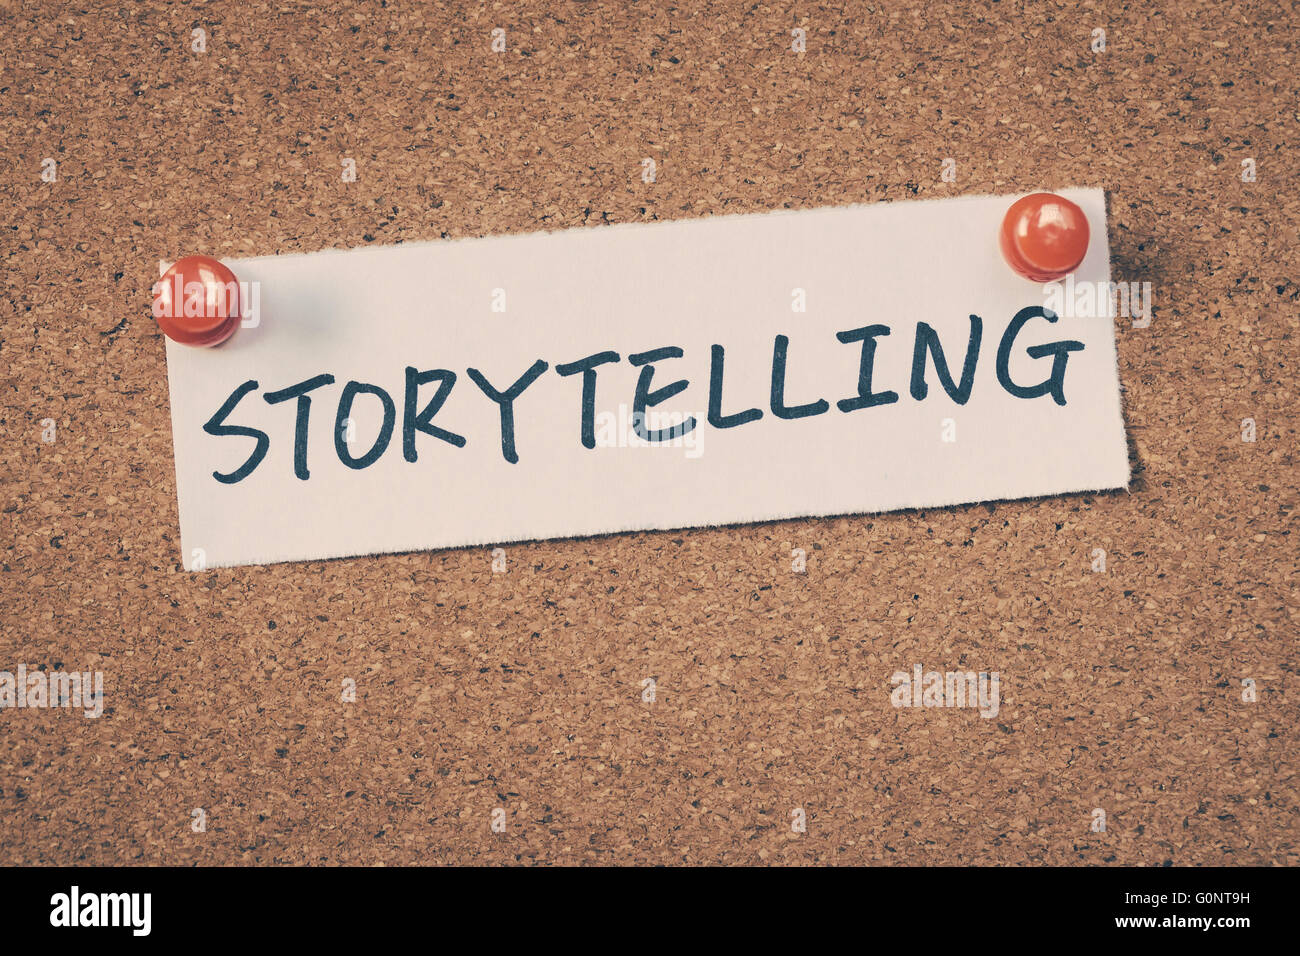 Storytelling Stock Photo